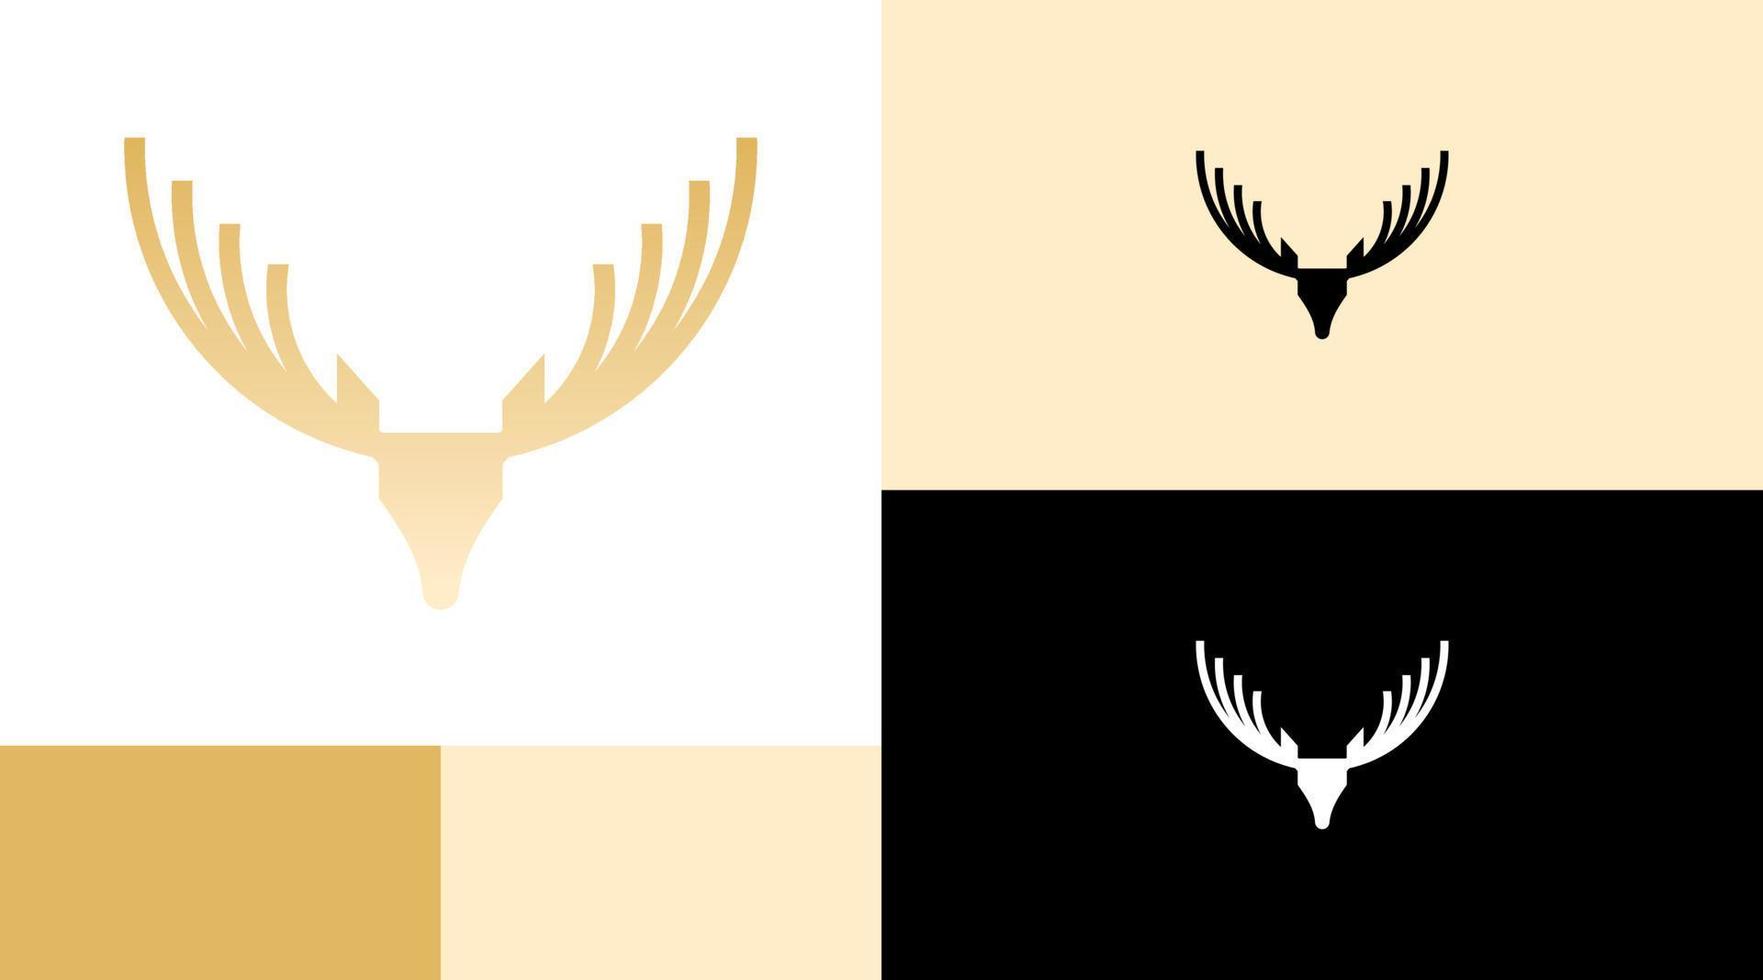 rådjur huvud med horn jakt skog logotyp designkoncept vektor